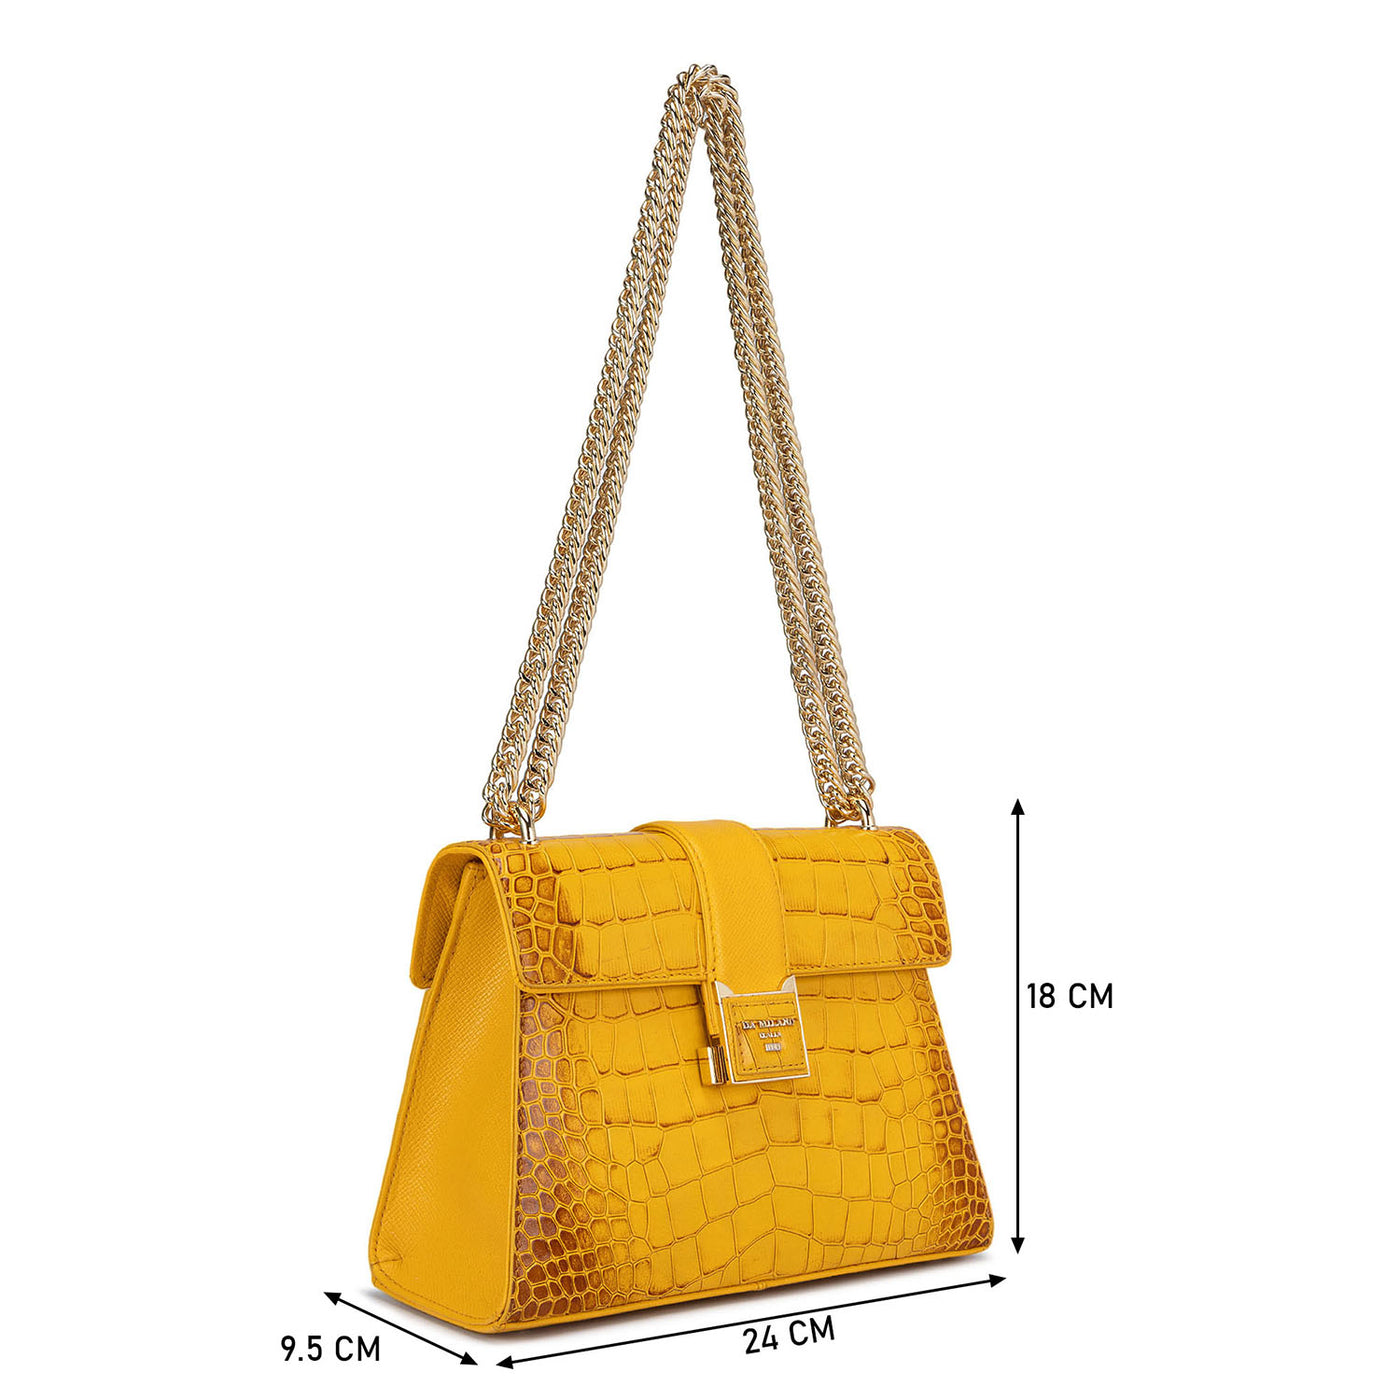 Small Croco Leather Shoulder Bag - Honey